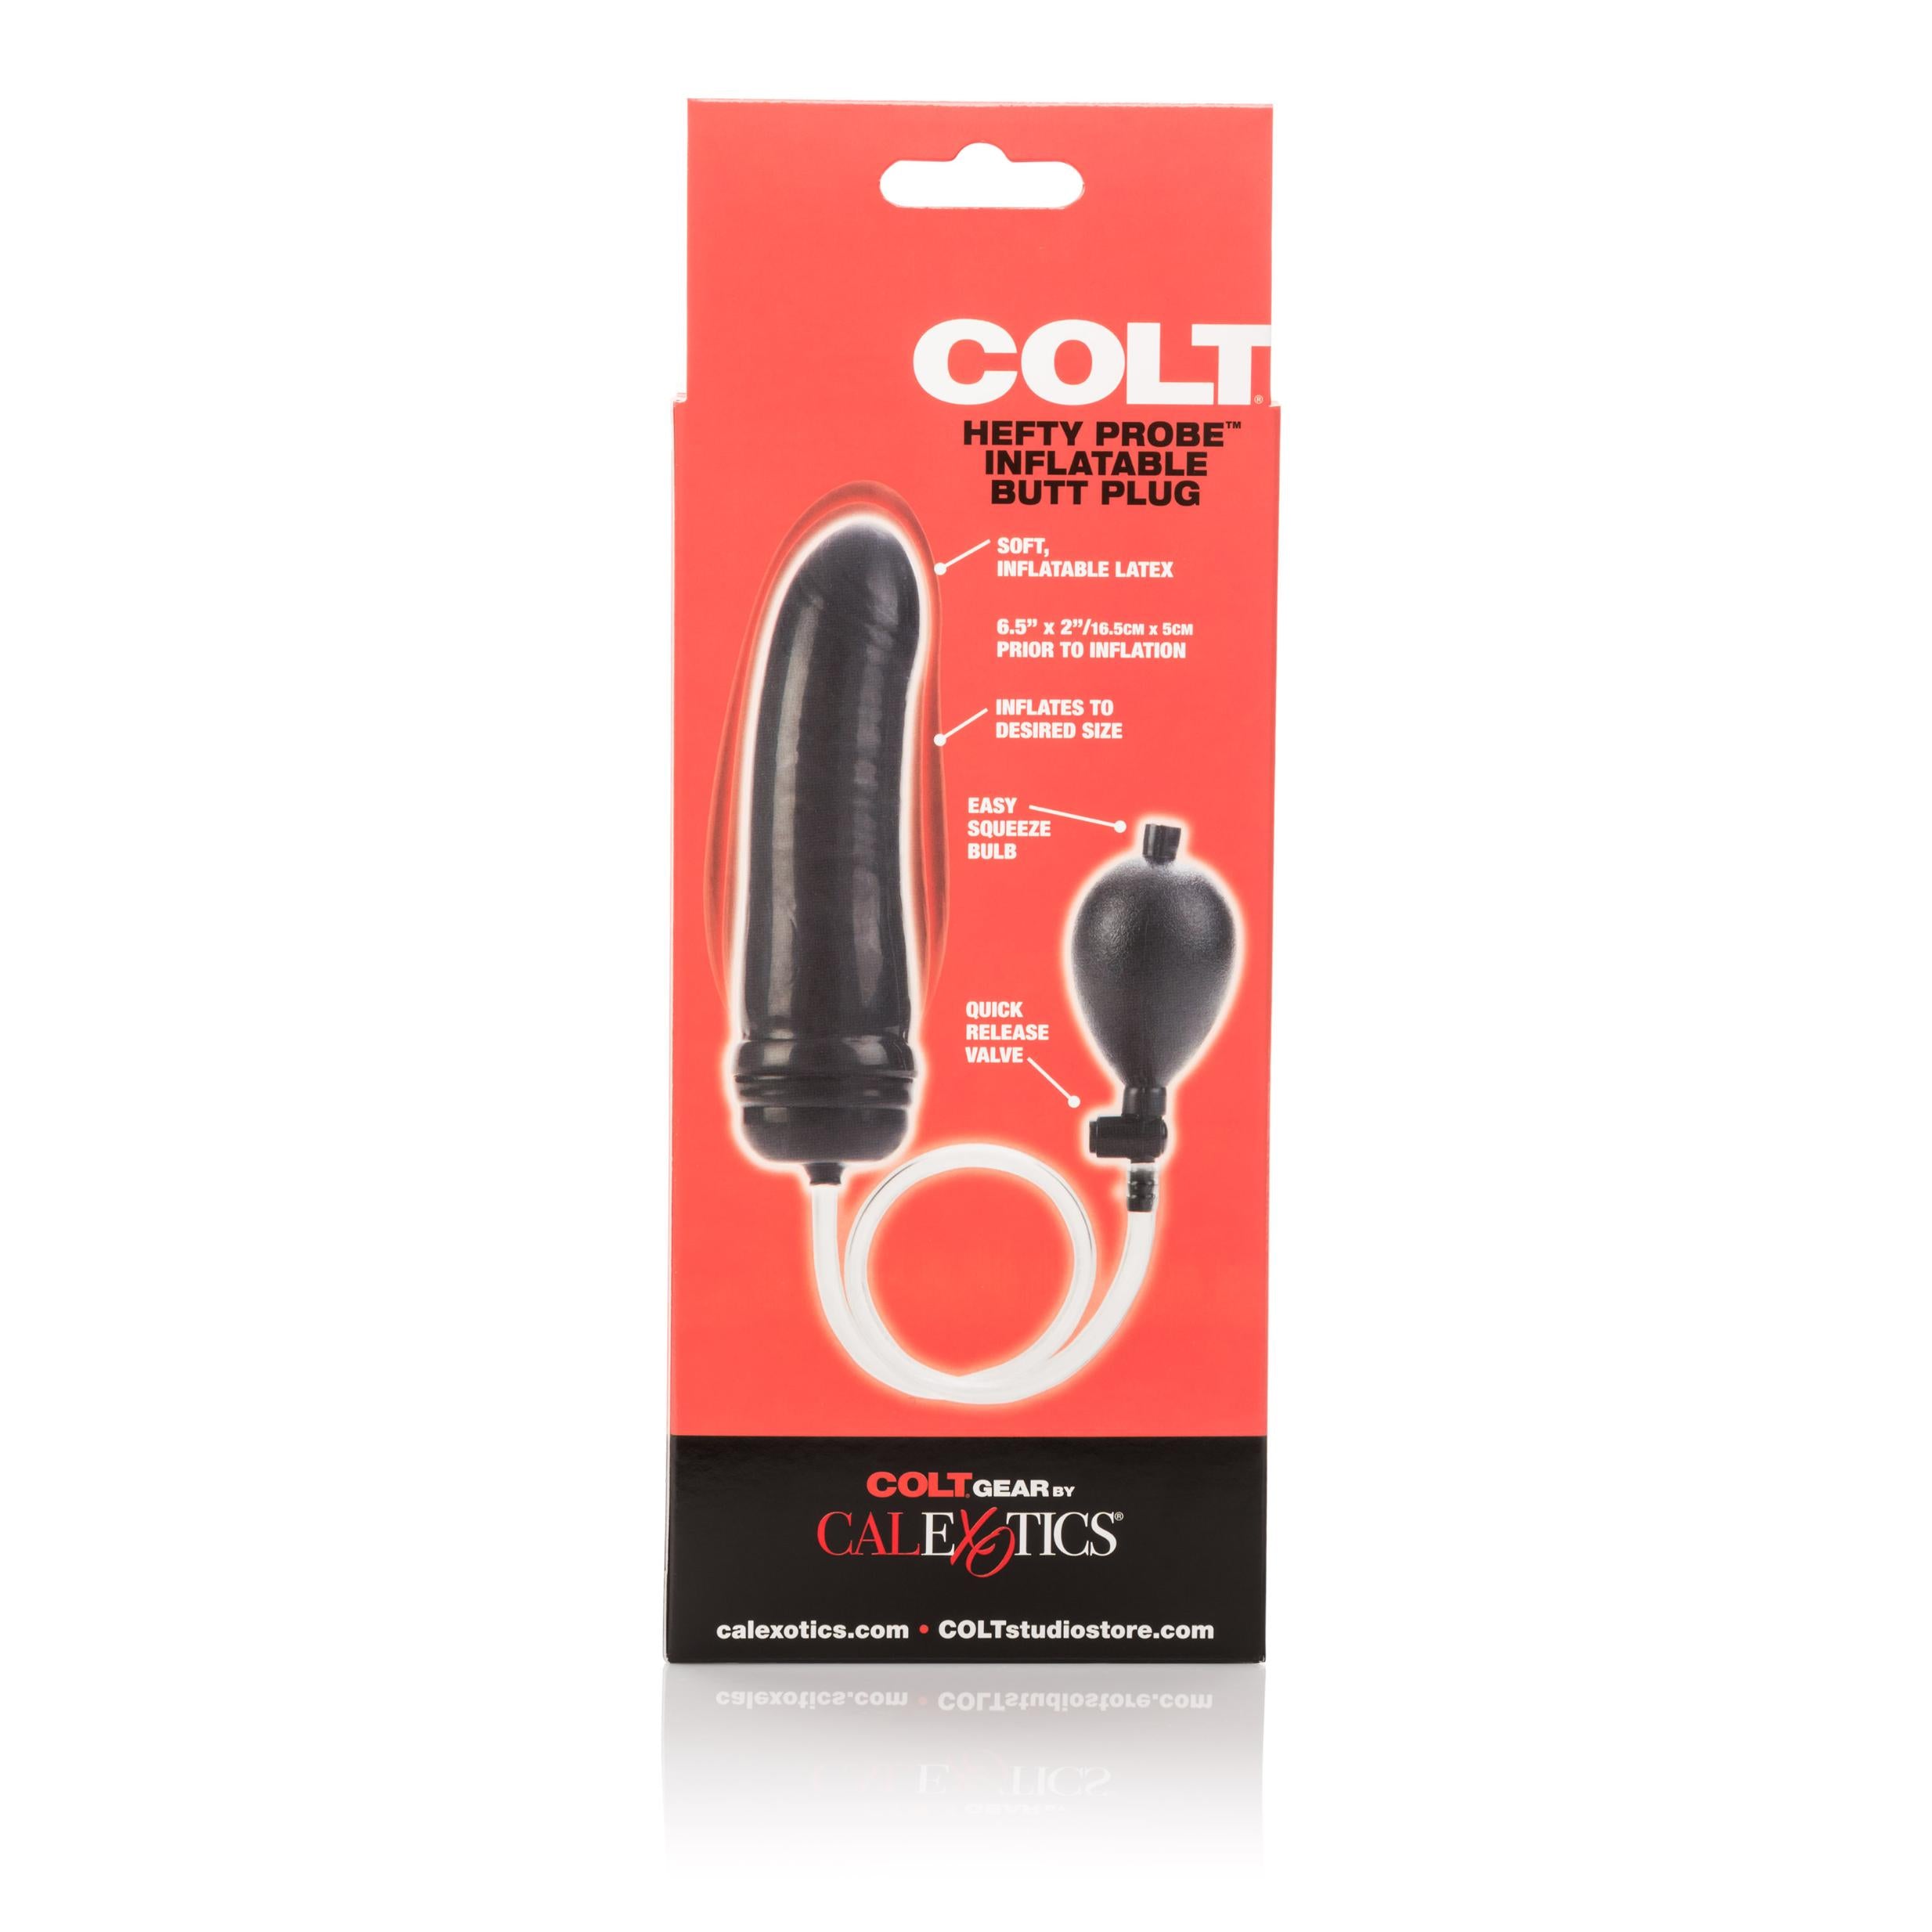 Colt Hefty Probe Inflatable Butt Plug - Black Black